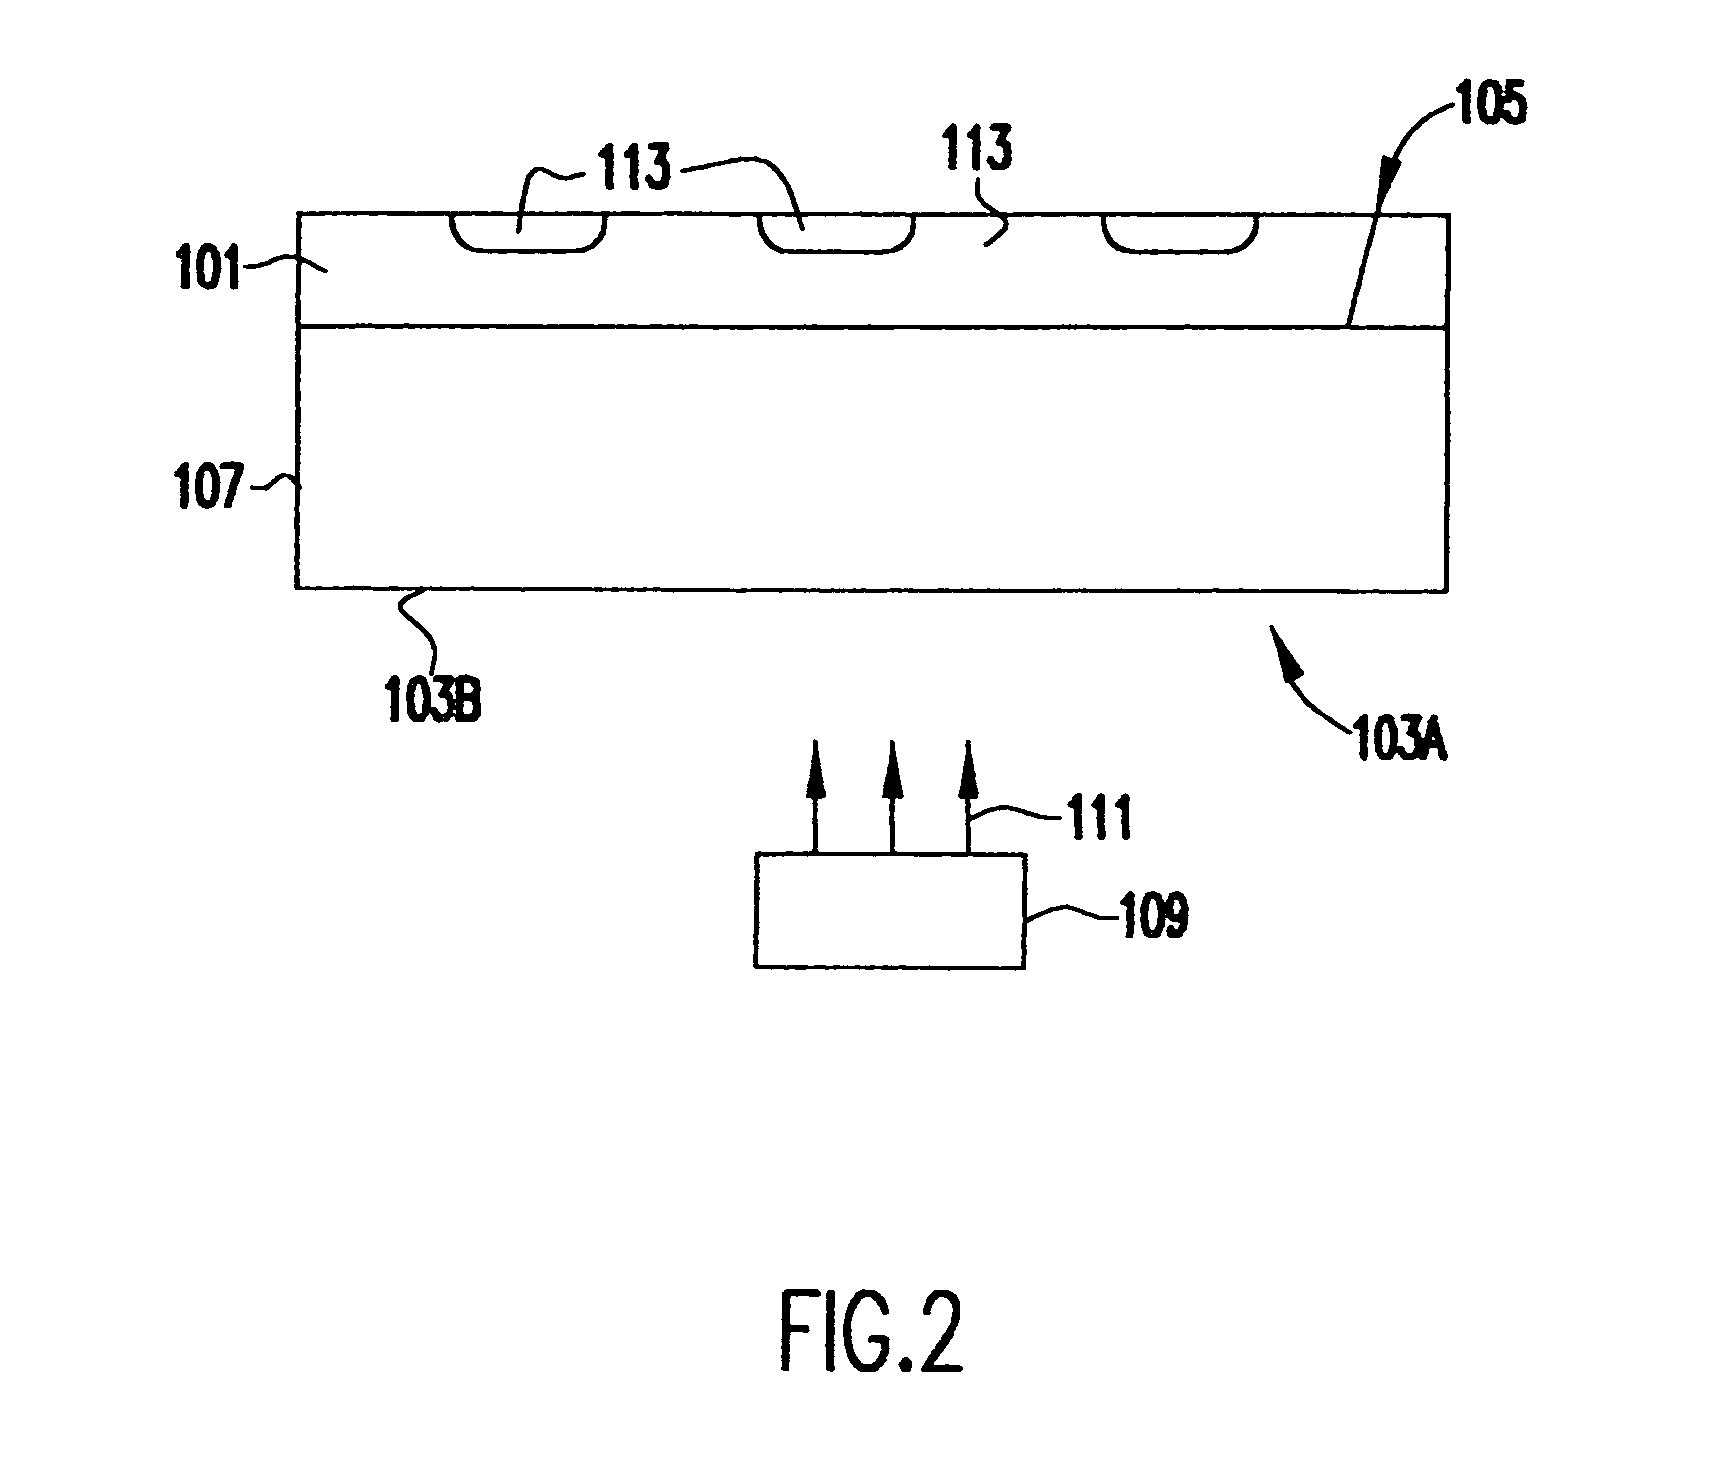 SiGe or germanium flip chip optical receiver